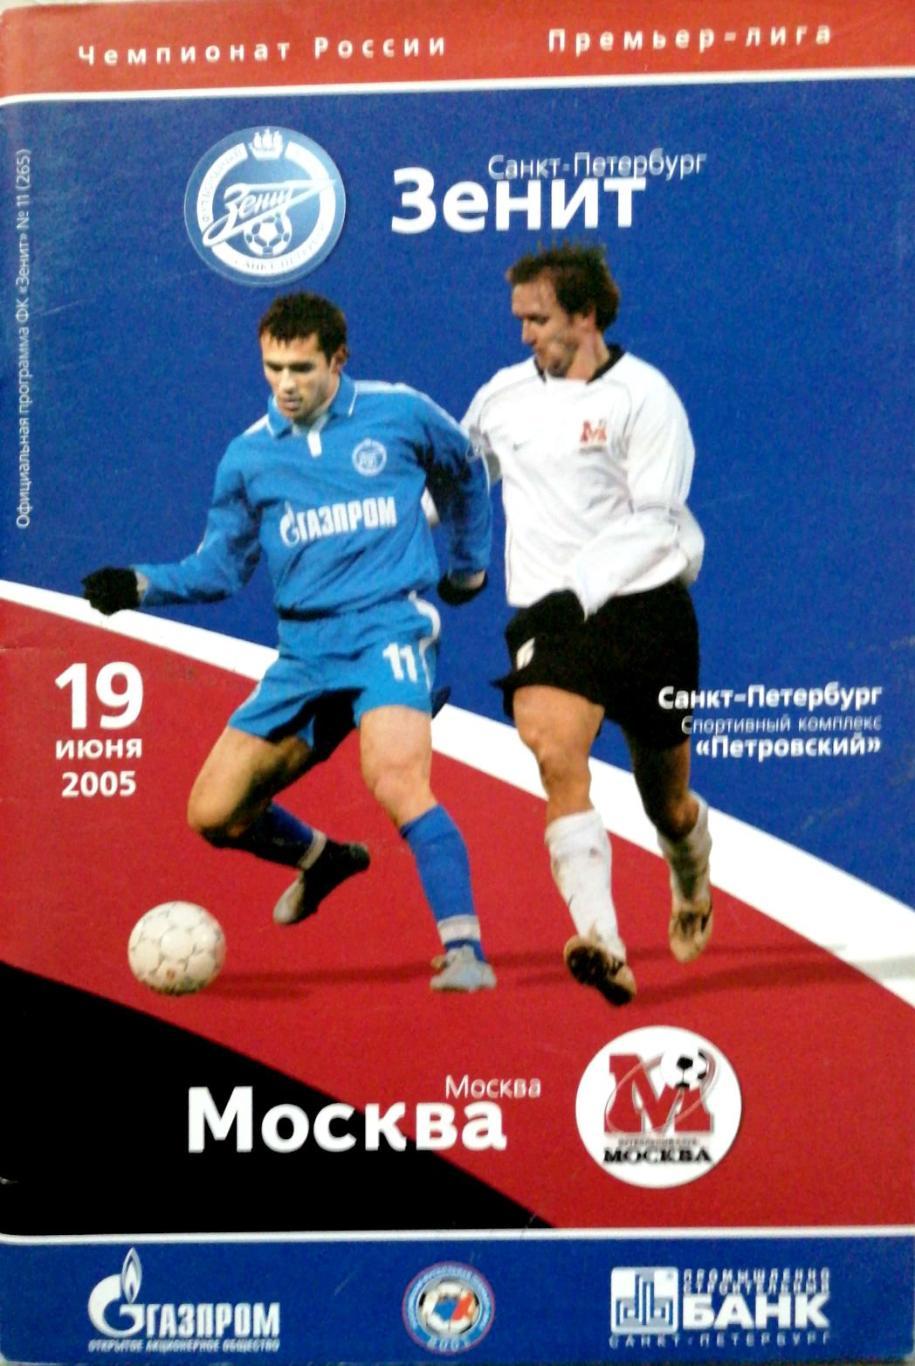 Чемпионат России-2005. Зенит - Москва (19.06.2005), постер Мартин Шкртэл А4